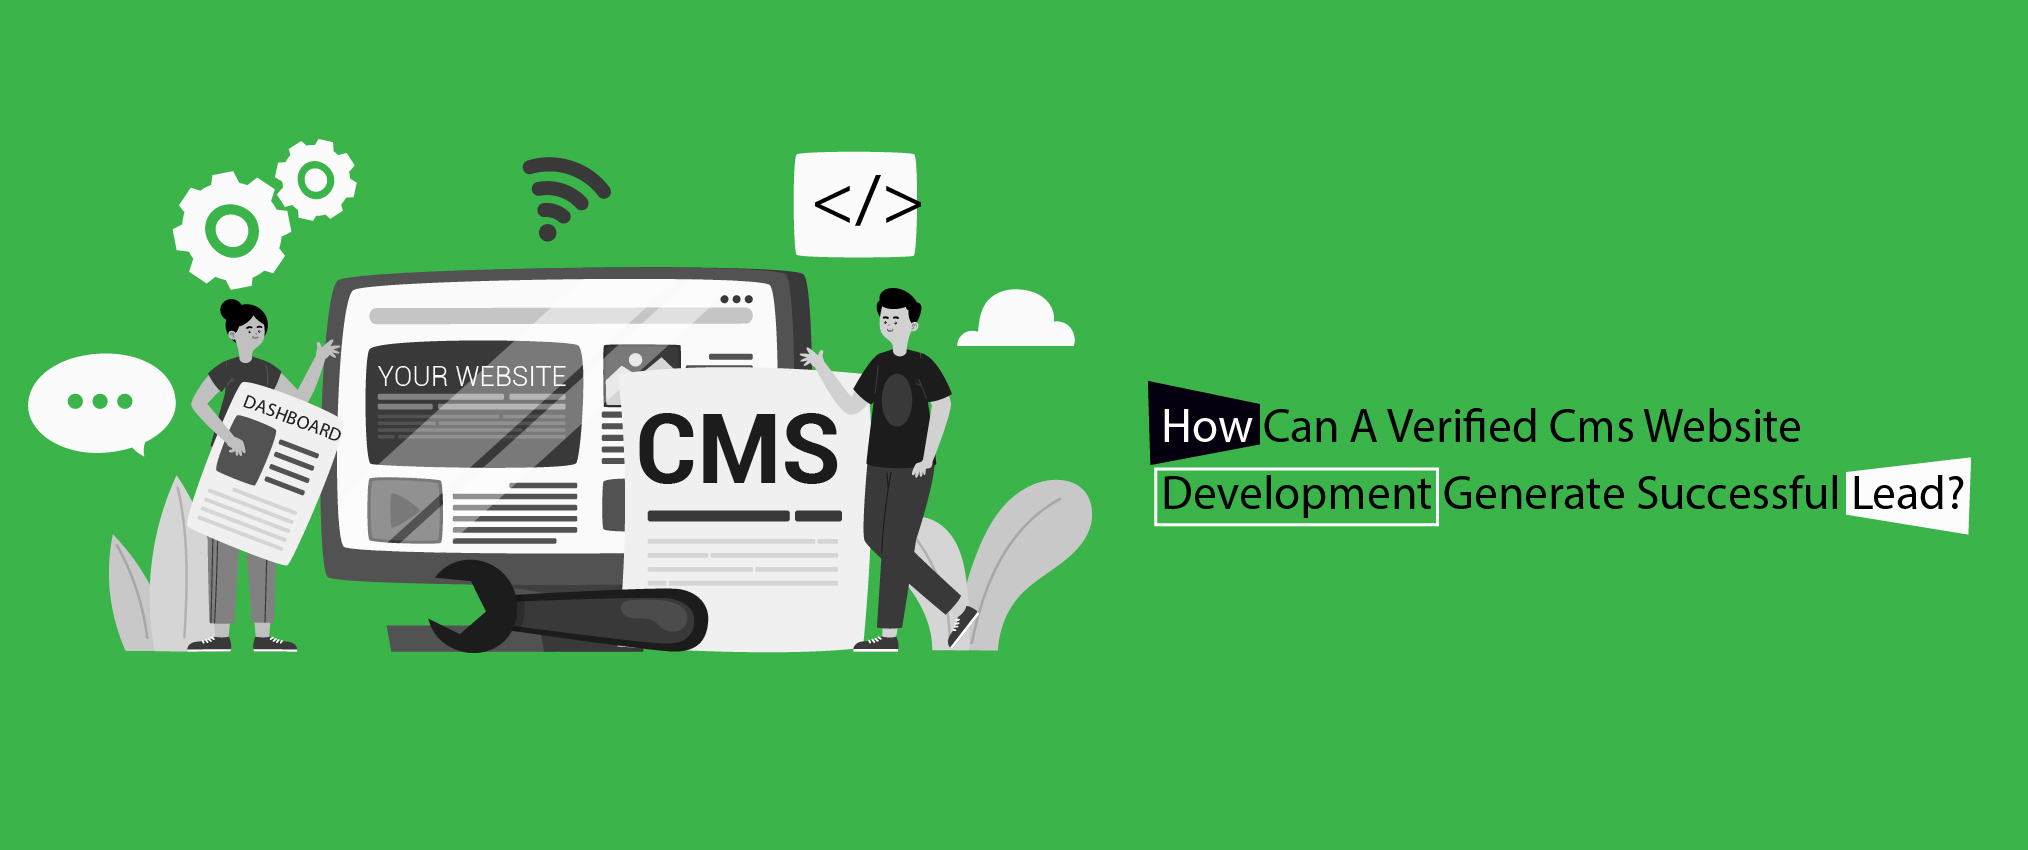 How can a verified CMS website development generate a successful lead?